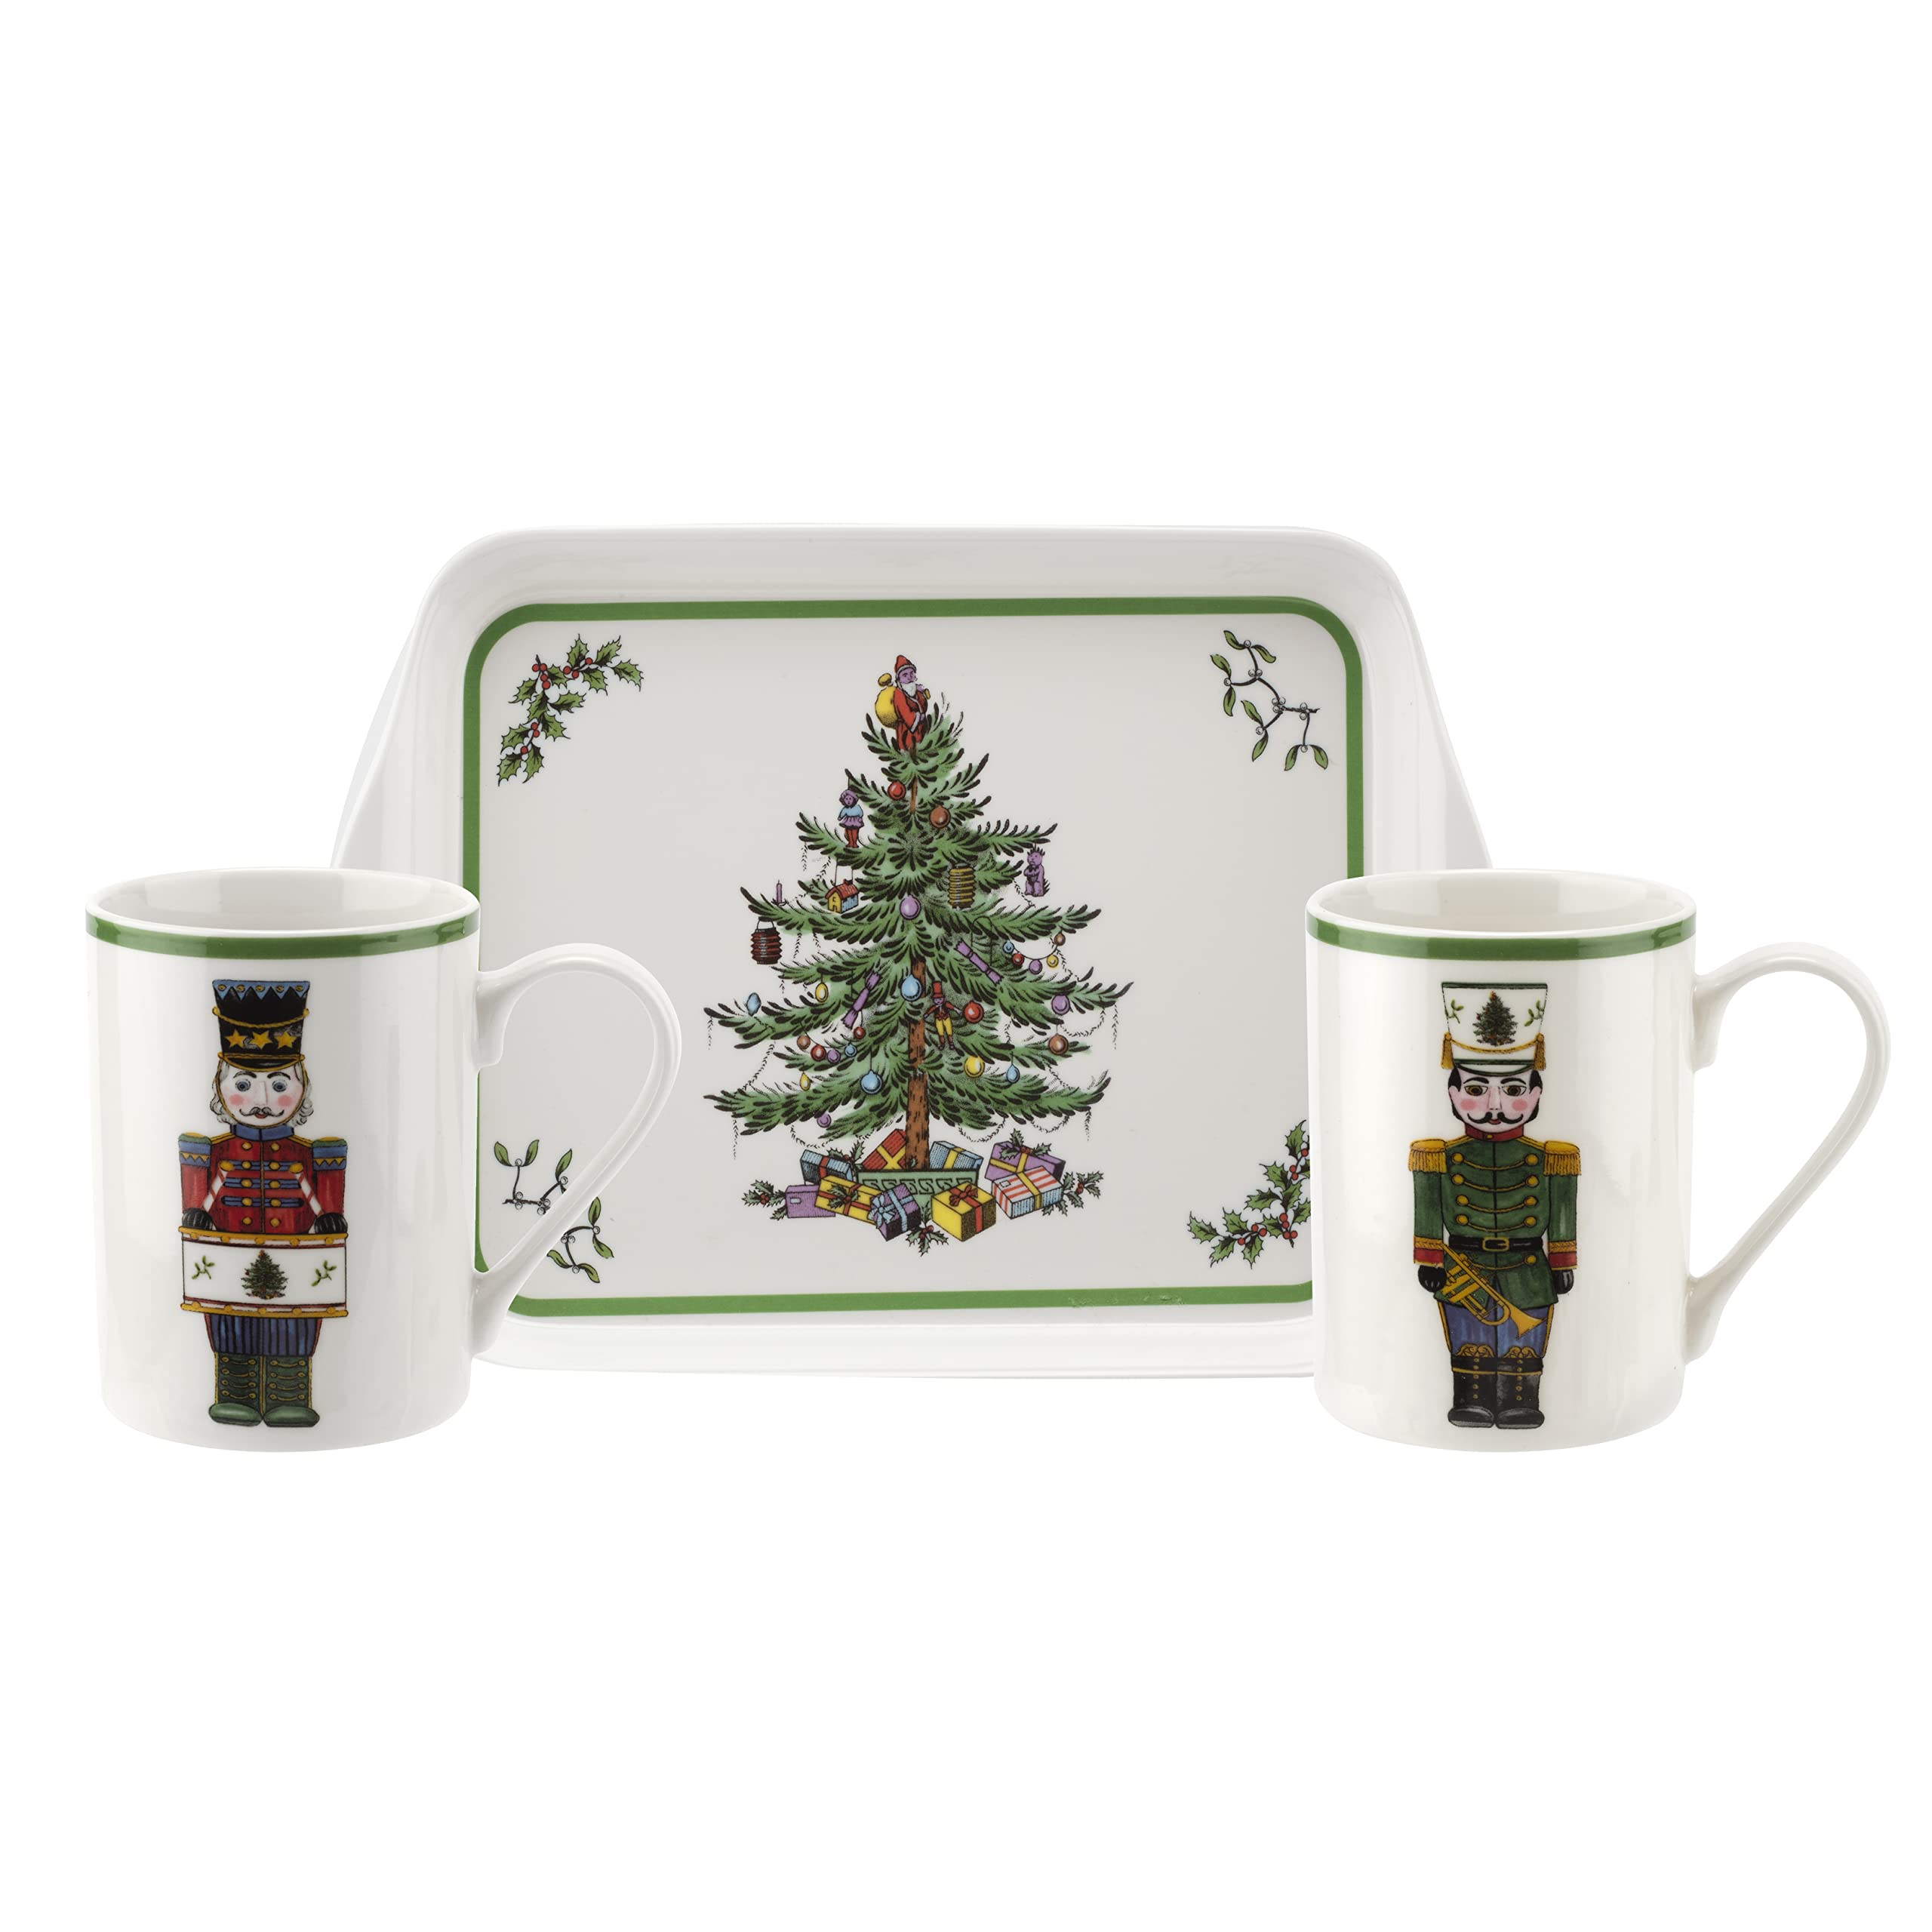 Spode - christmas Tree Nutcracker Mugs and Tray, 3-Piece Set, Holiday Breakfast Tray, 10-Ounce coffee Mug, Made of Porcelain and